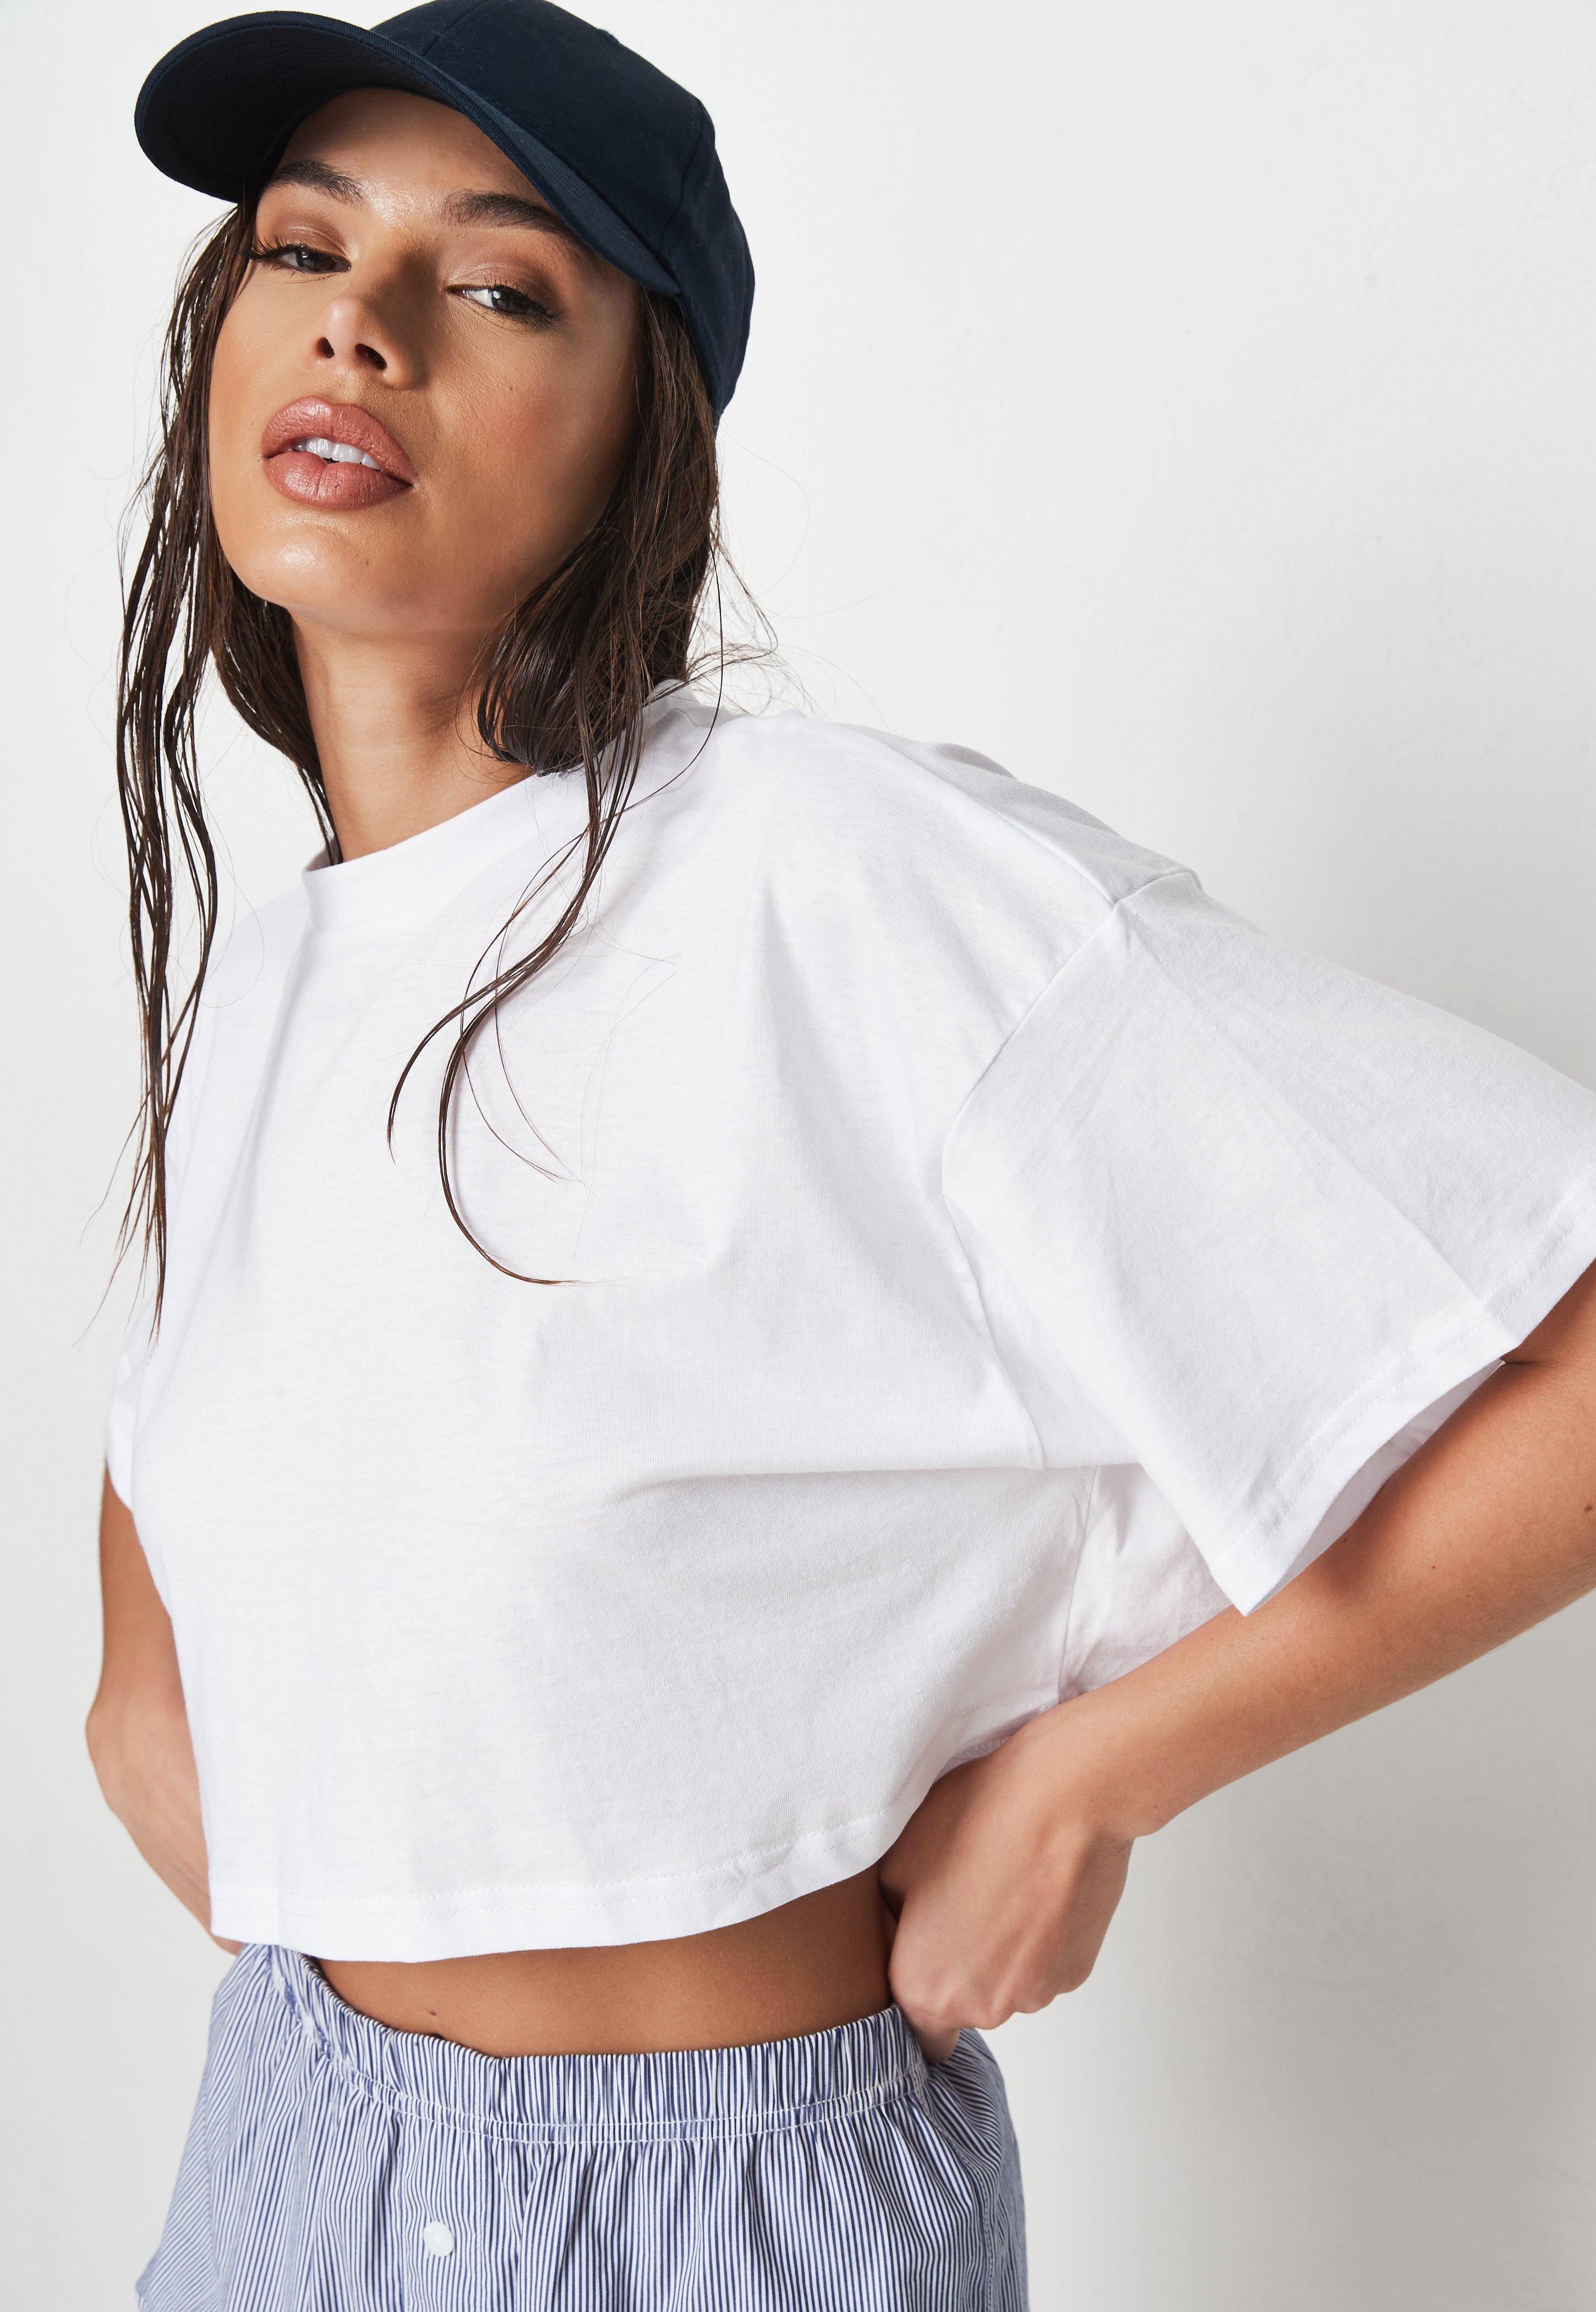 Ladies Cropped Shirts (Screen Printed) - BRNDURNAME